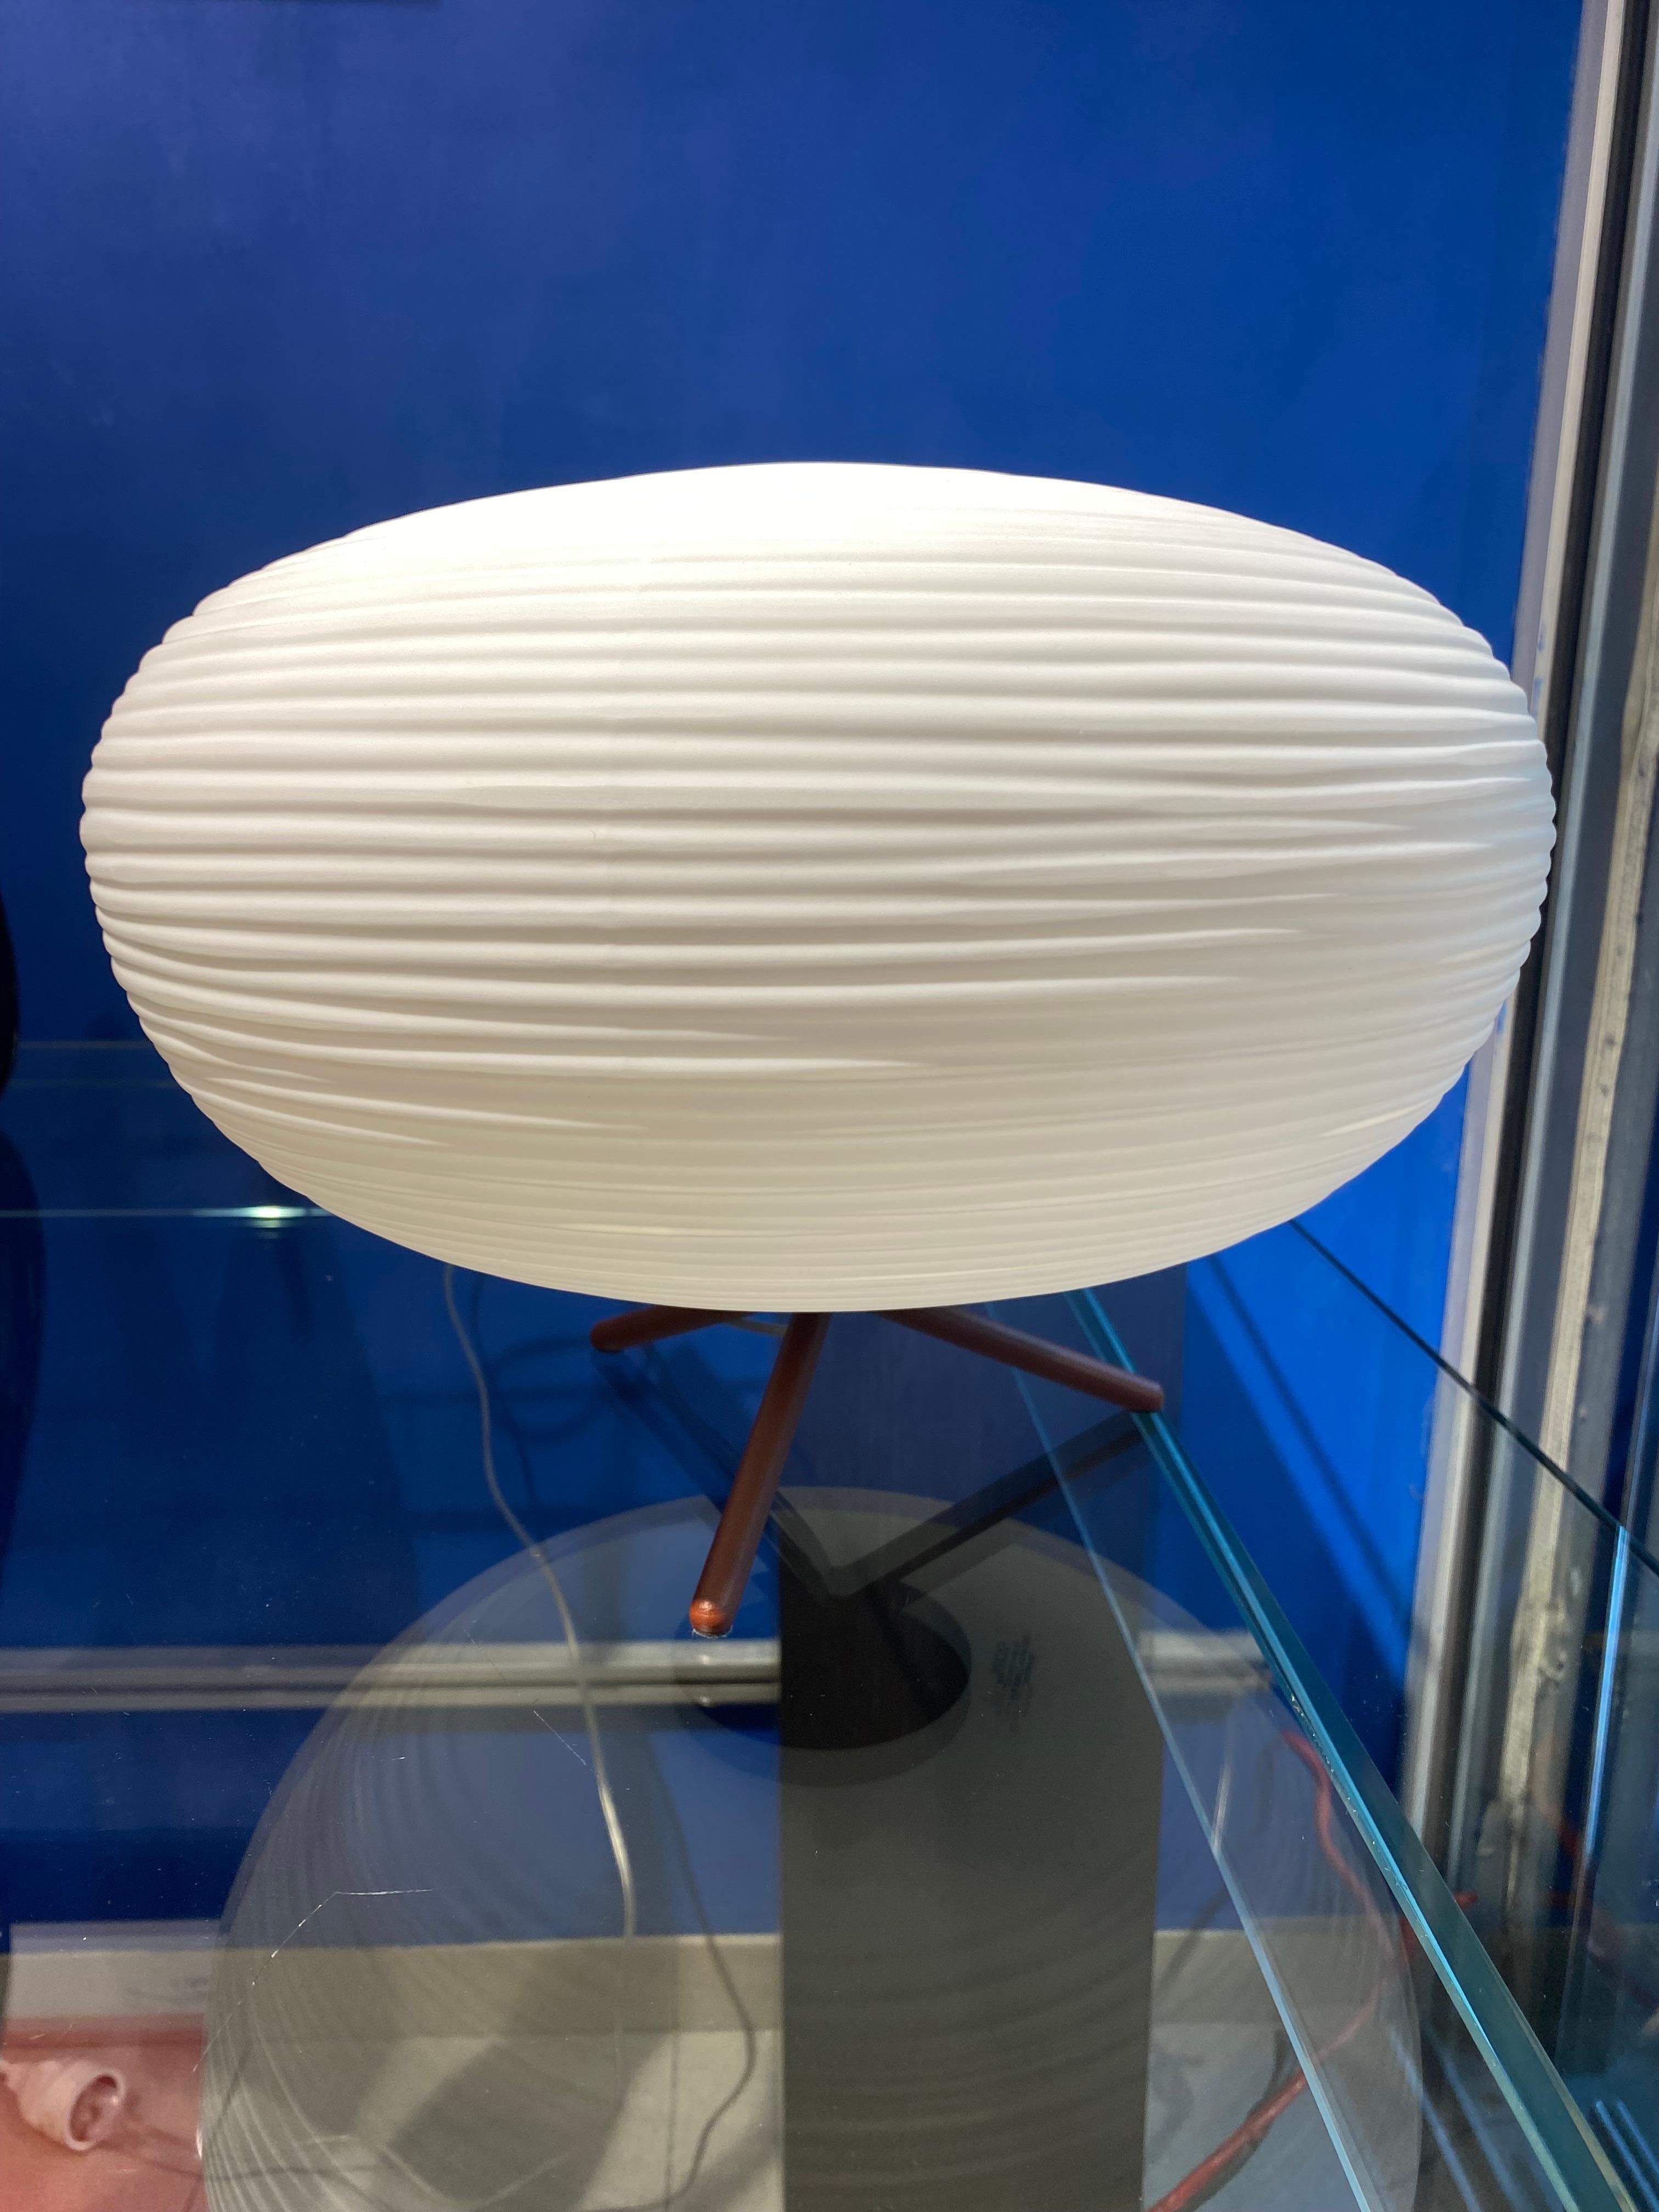 Foscarini's Rituals  table lamp, designed by Ludovica and Roberto Palomba. 1